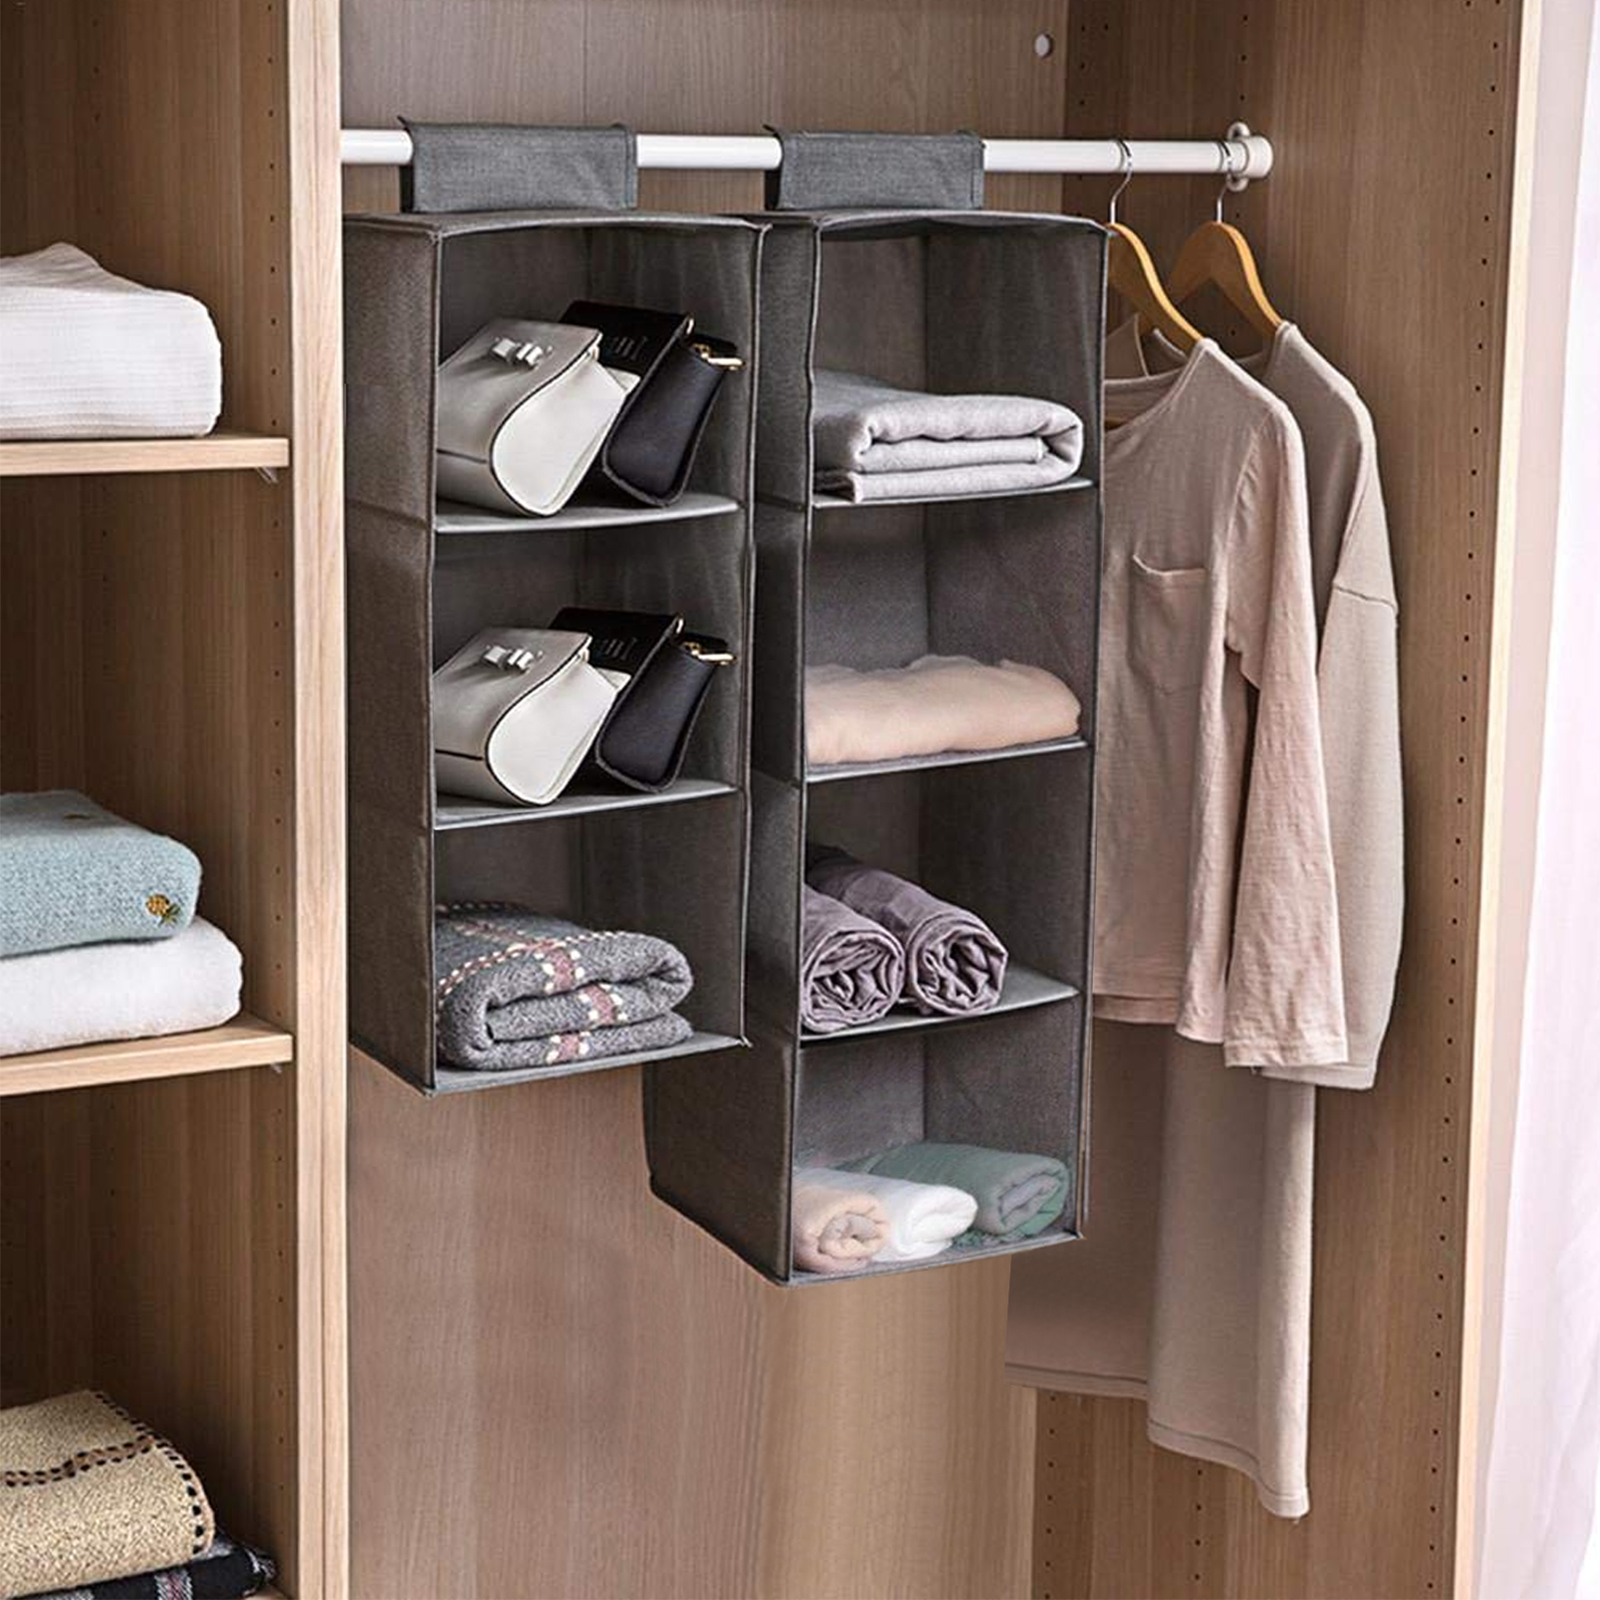 Zober 5 Shelf Hanging Closet Organizer Space Saver Roomy Breathable Grey For Sale Online Ebay